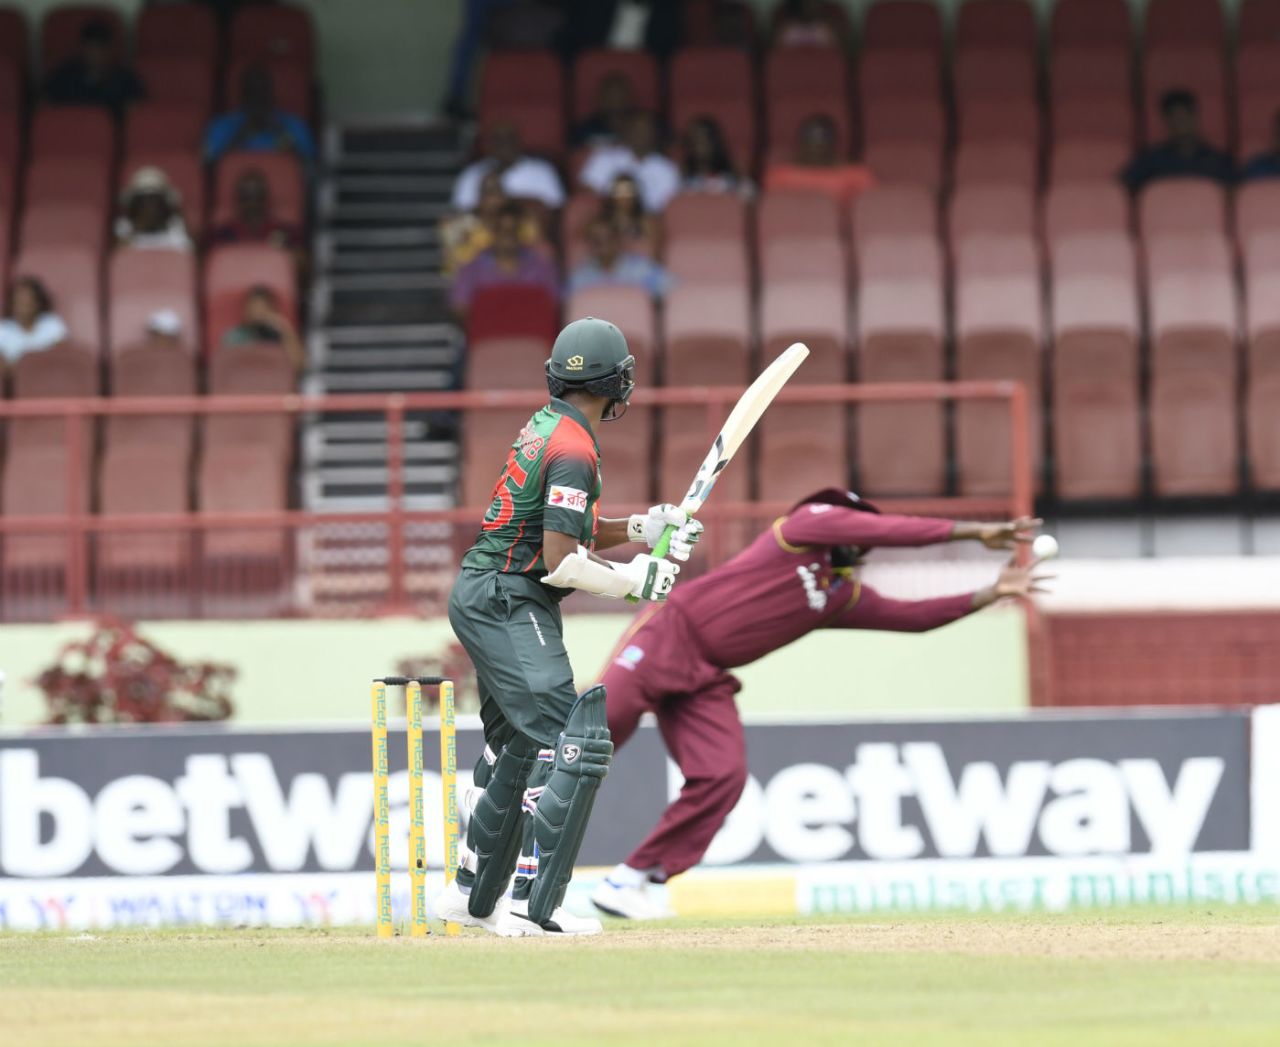 Chris Gayle puts down a touch chance to reprieve Shakib Al Hasan at slip, West Indies v Bangladesh, 1st ODI, Guyana, July 22, 2018